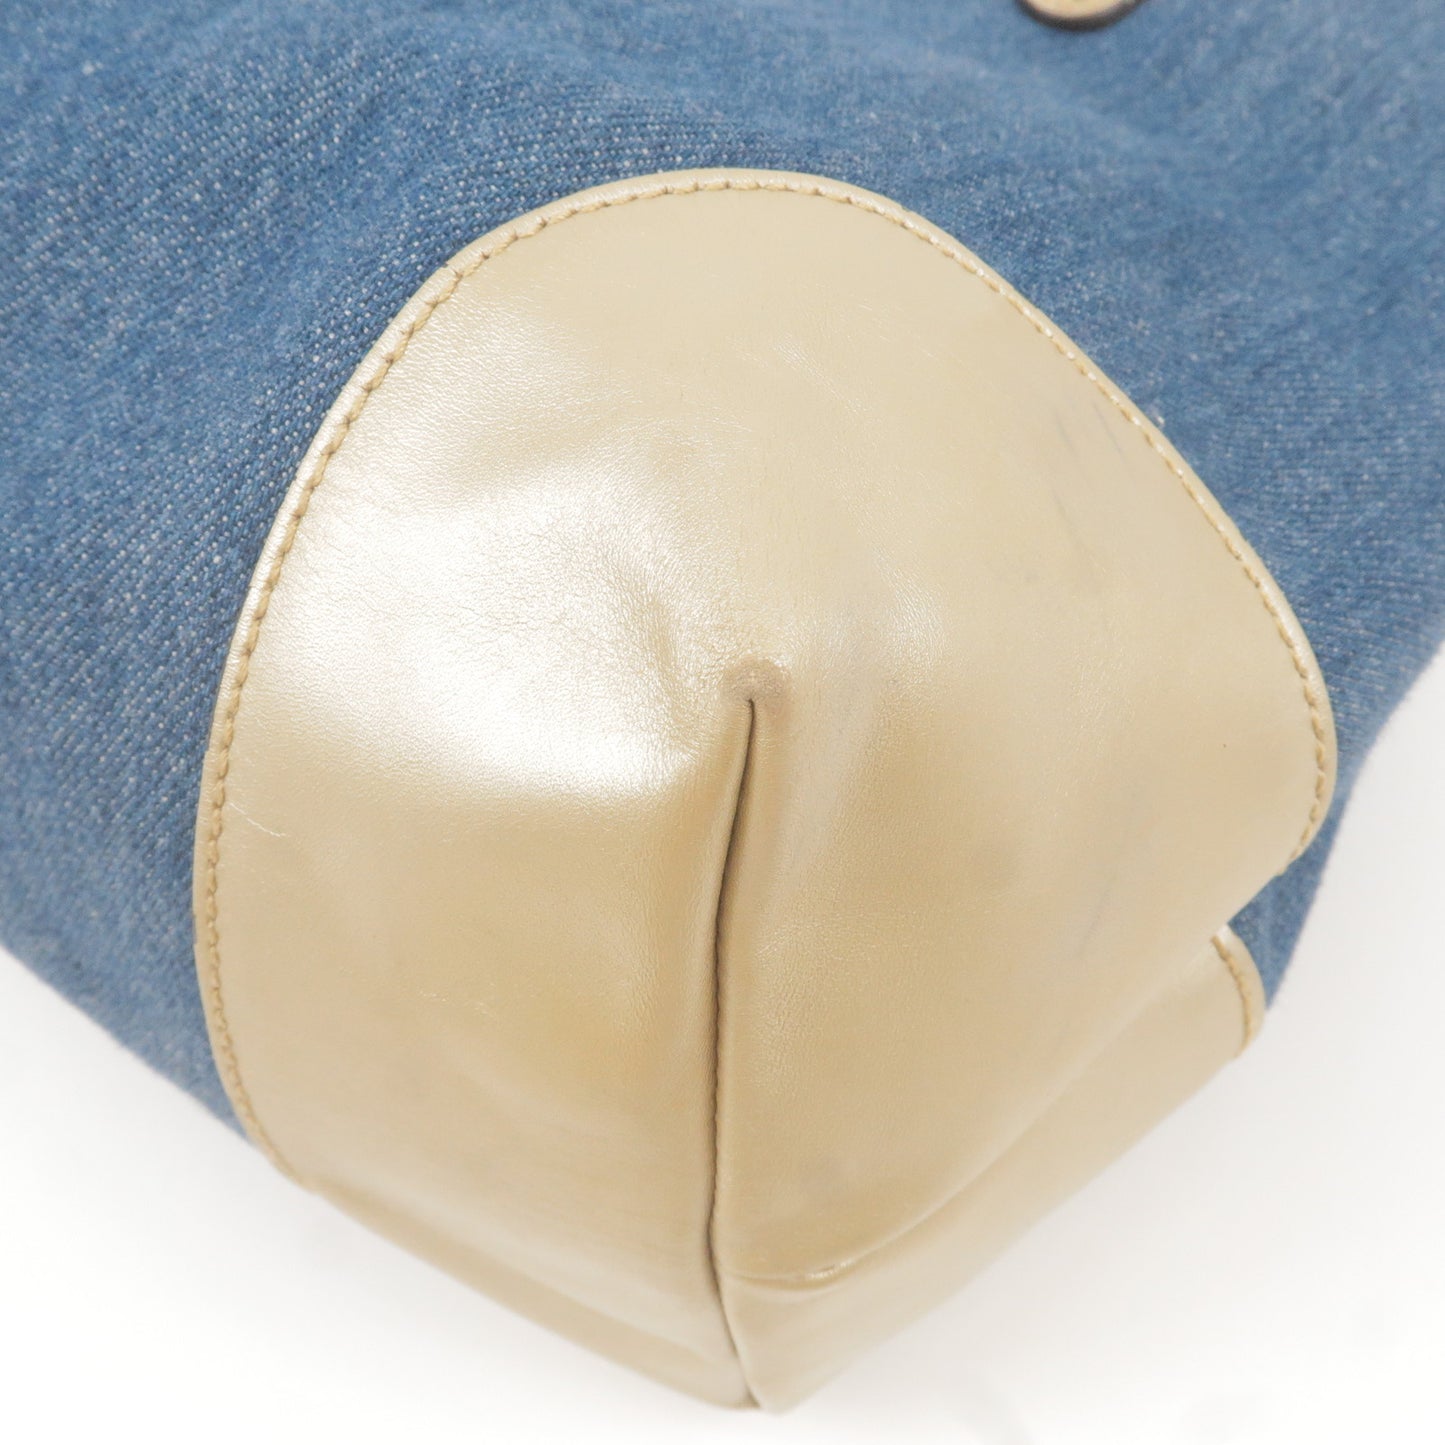 GUCCI Craft Denim Leather Tote Bag Japan limited Blue Gold 348715